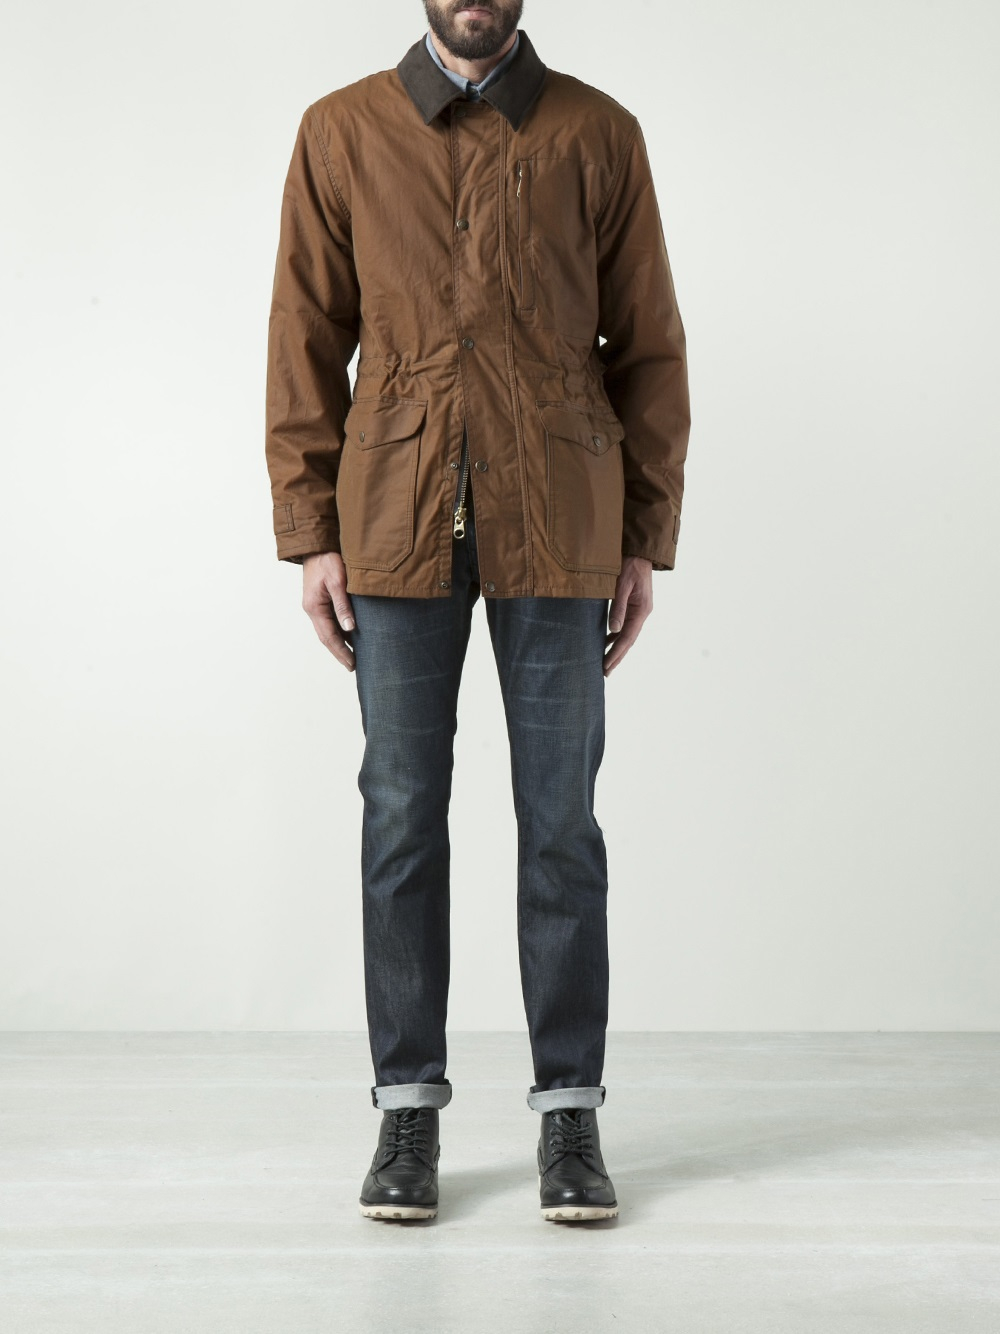 Lyst - Filson Weekender Coat in Brown for Men